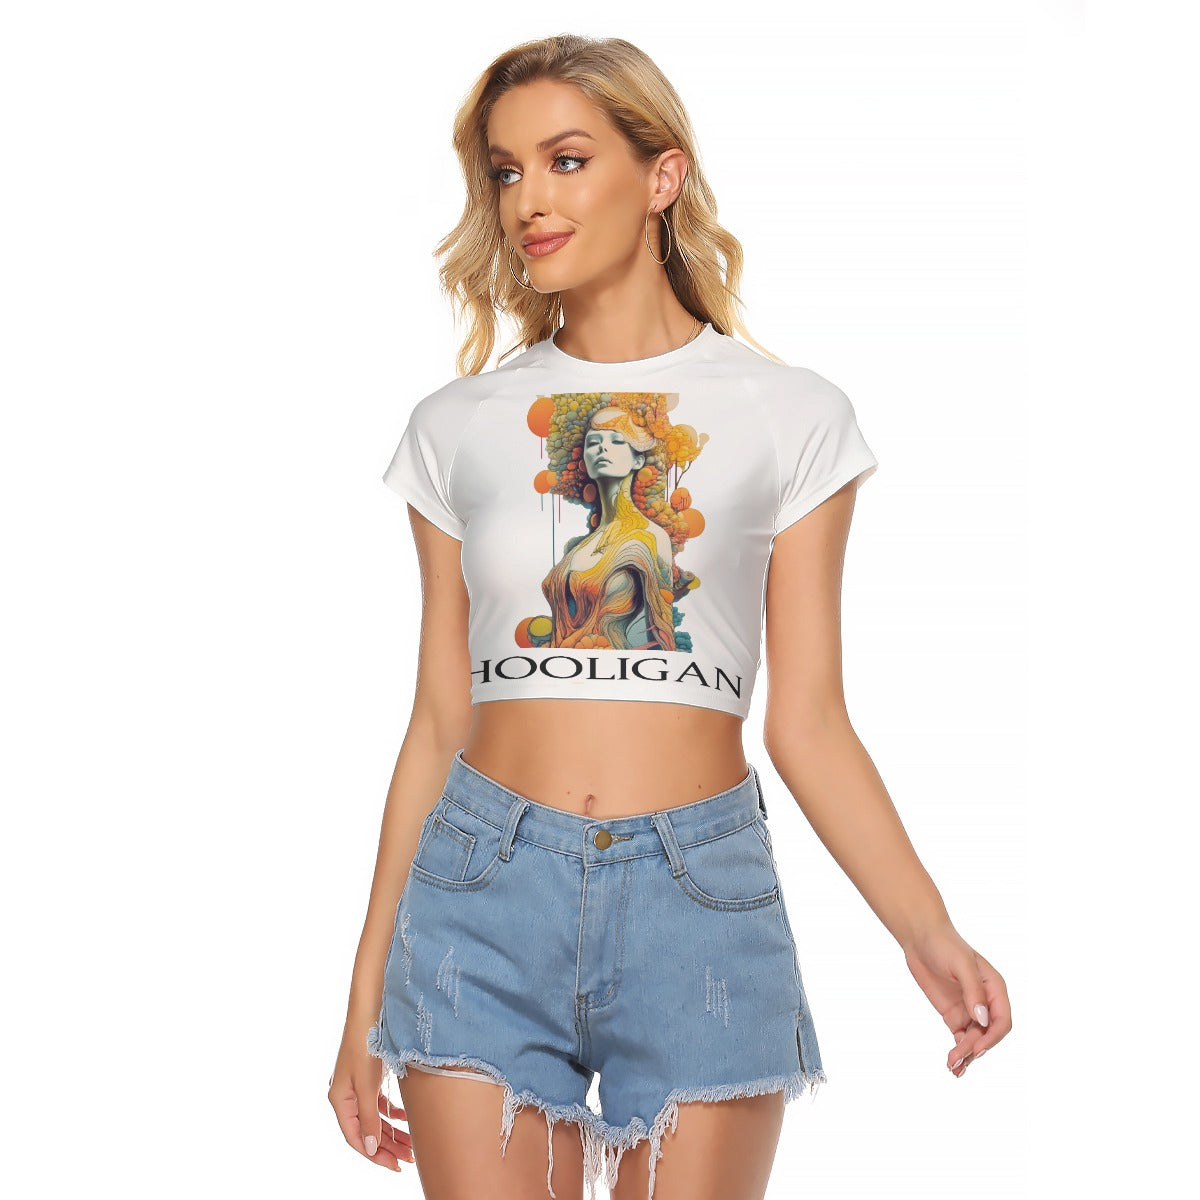 All-Over Print Women's Raglan Cropped T-shirt